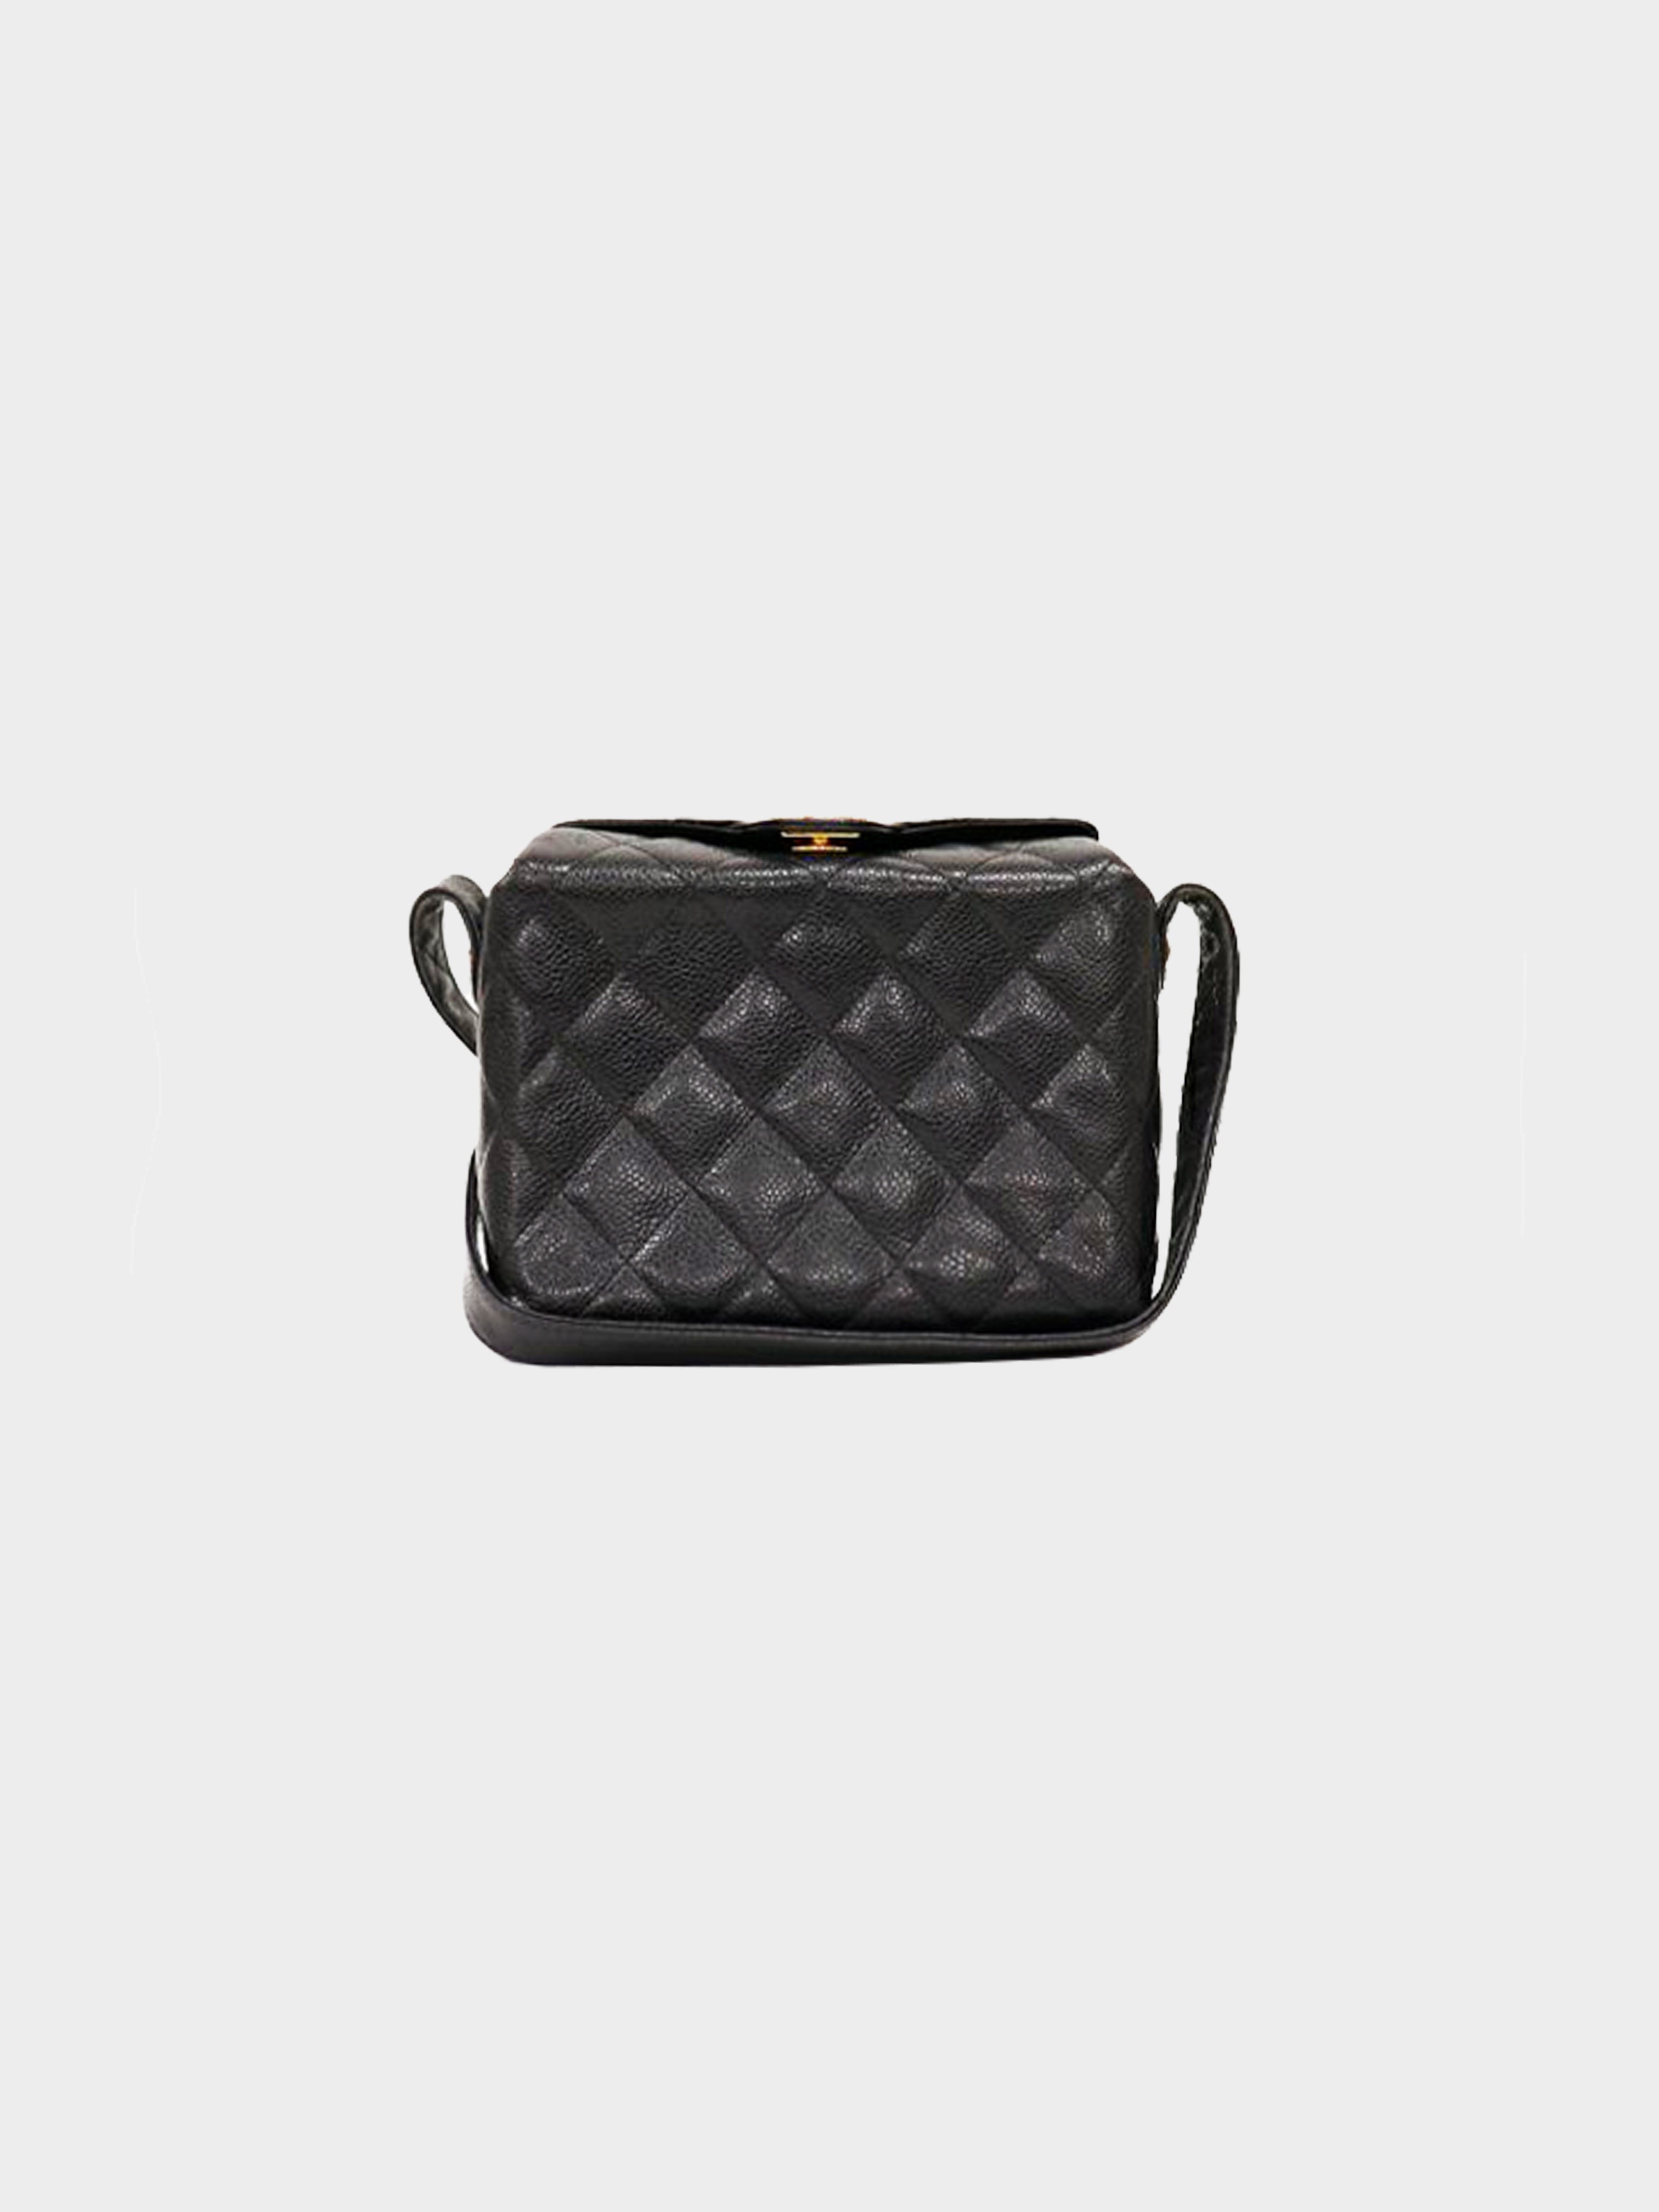 CHANEL CC Matelasse Chain shoulder Shoulder Bag Caviar Leather Black